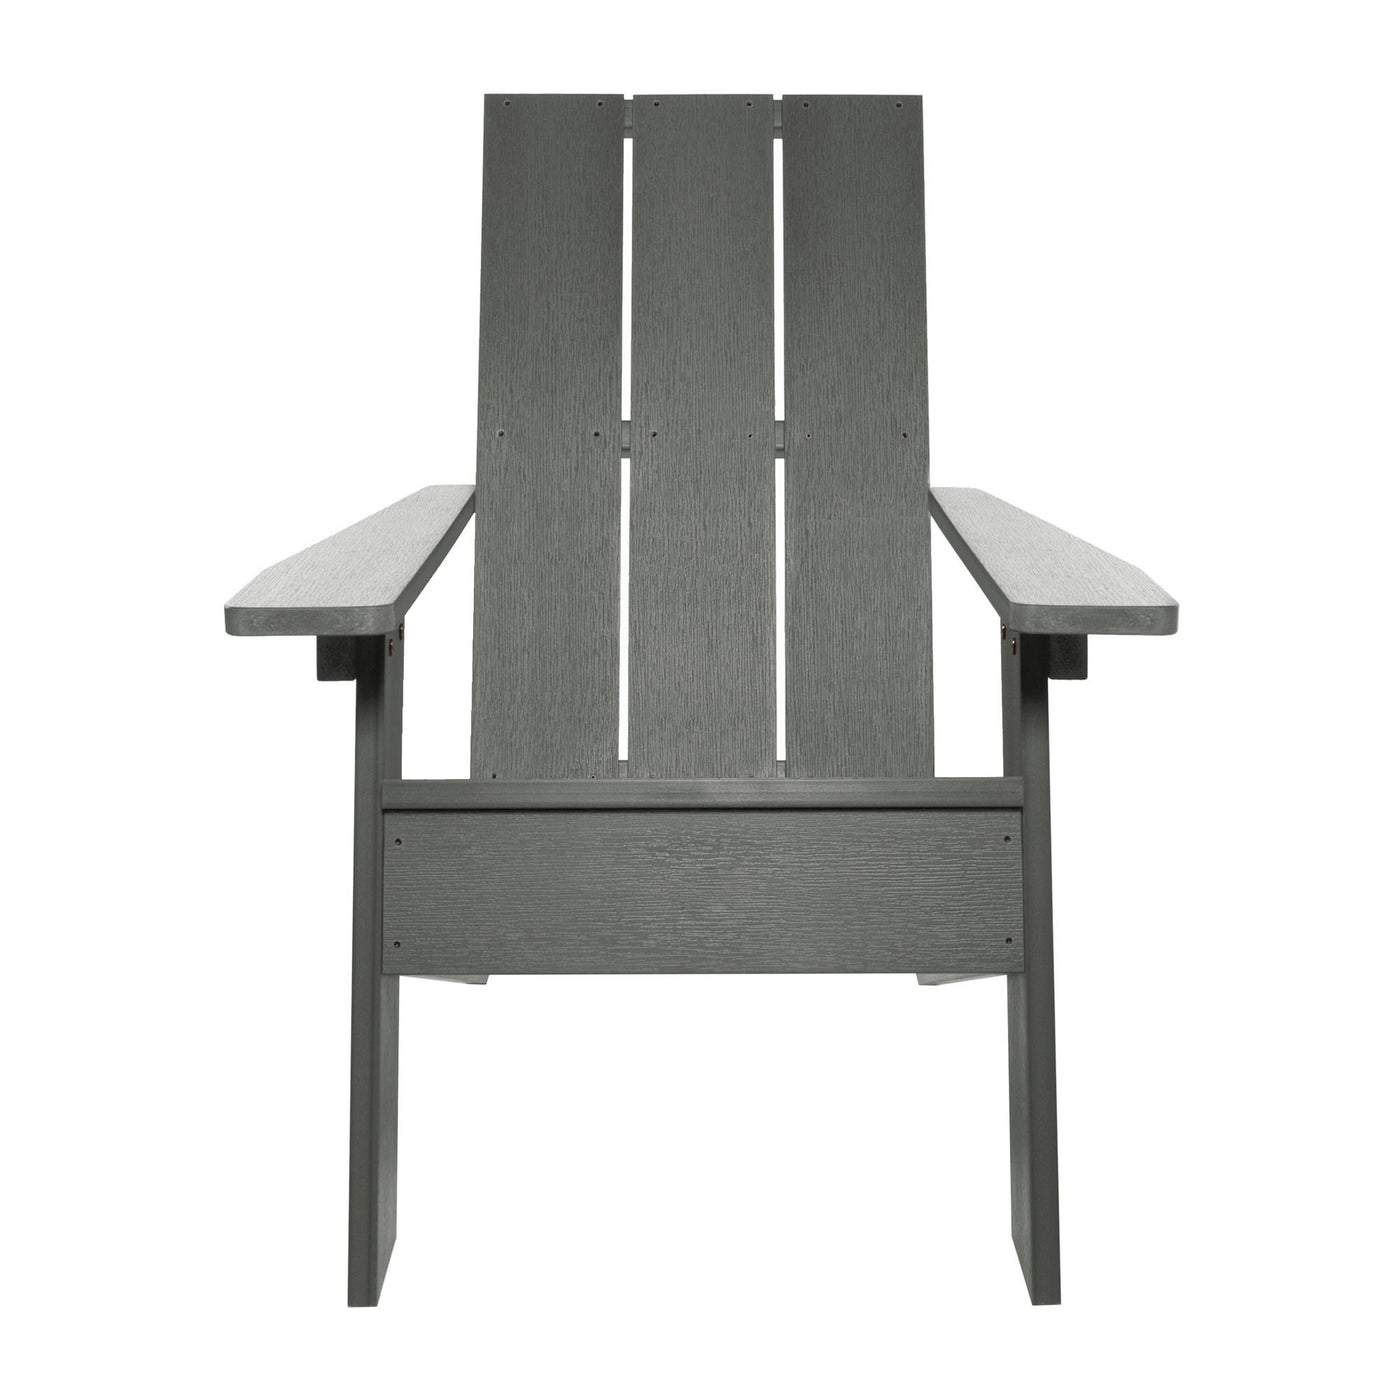 Italica Modern Adirondack chair in Gray 